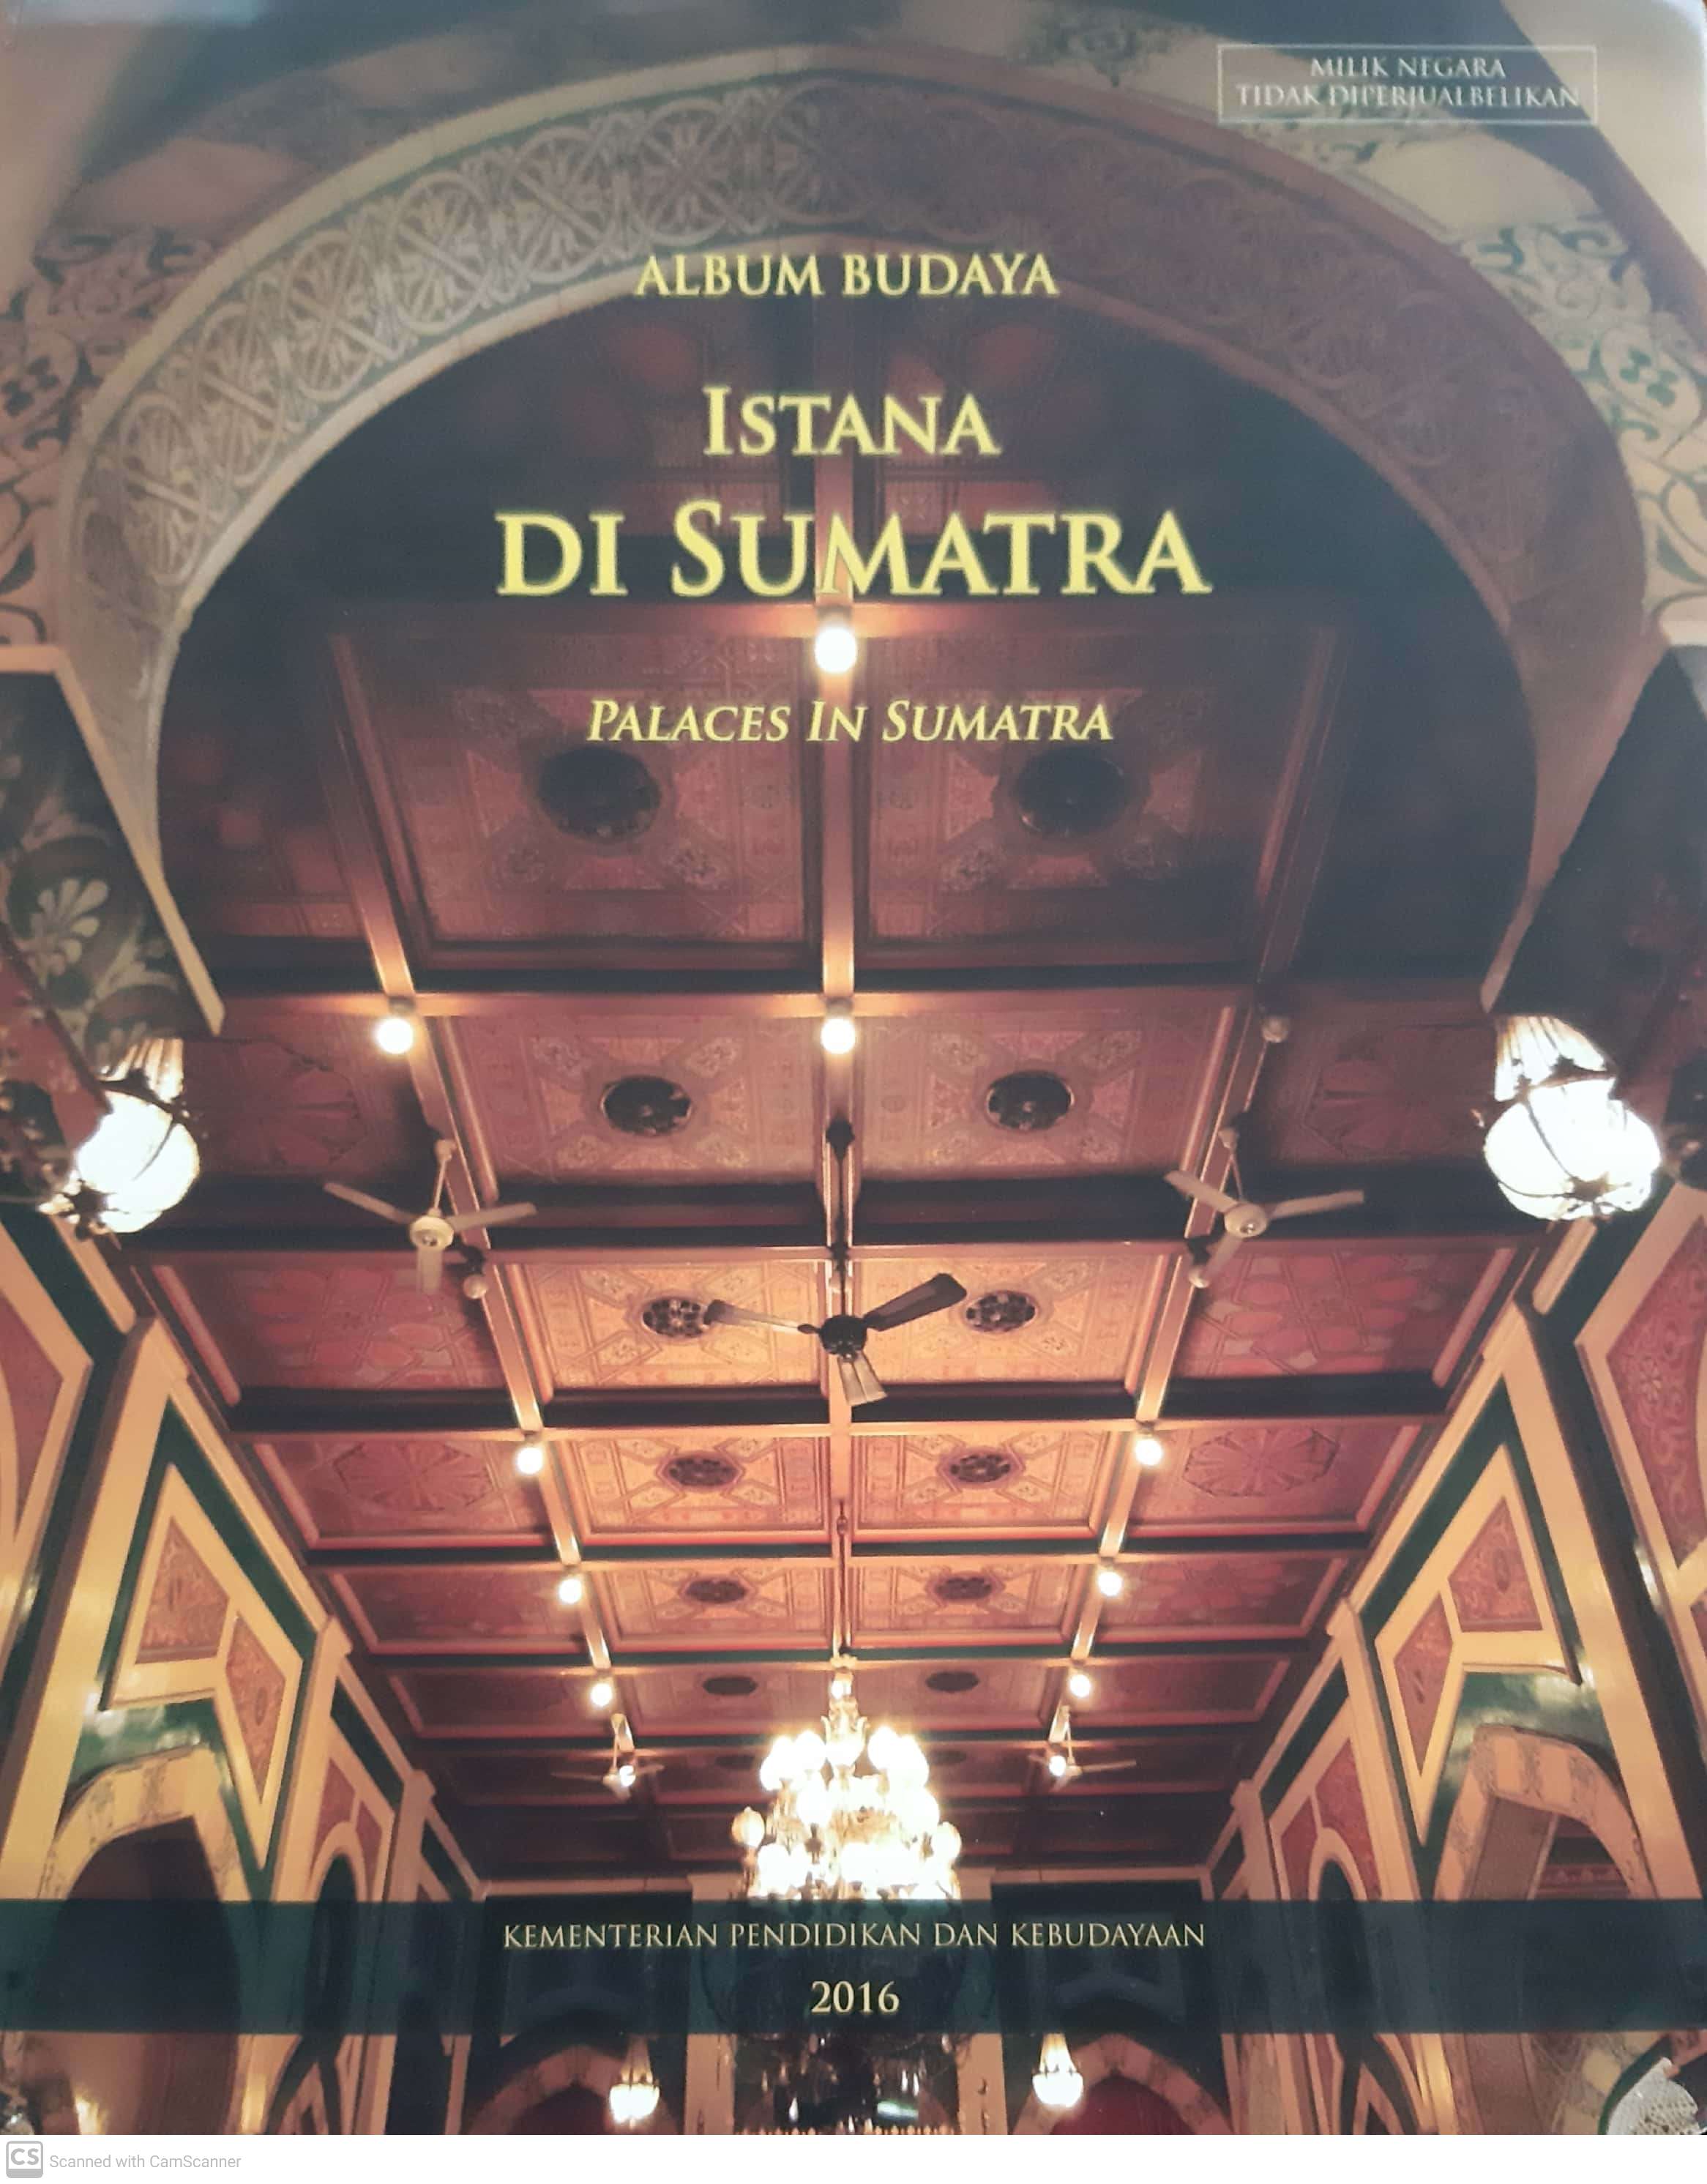 Album Budaya Istana Di Sumatra (Places in Sumatra)